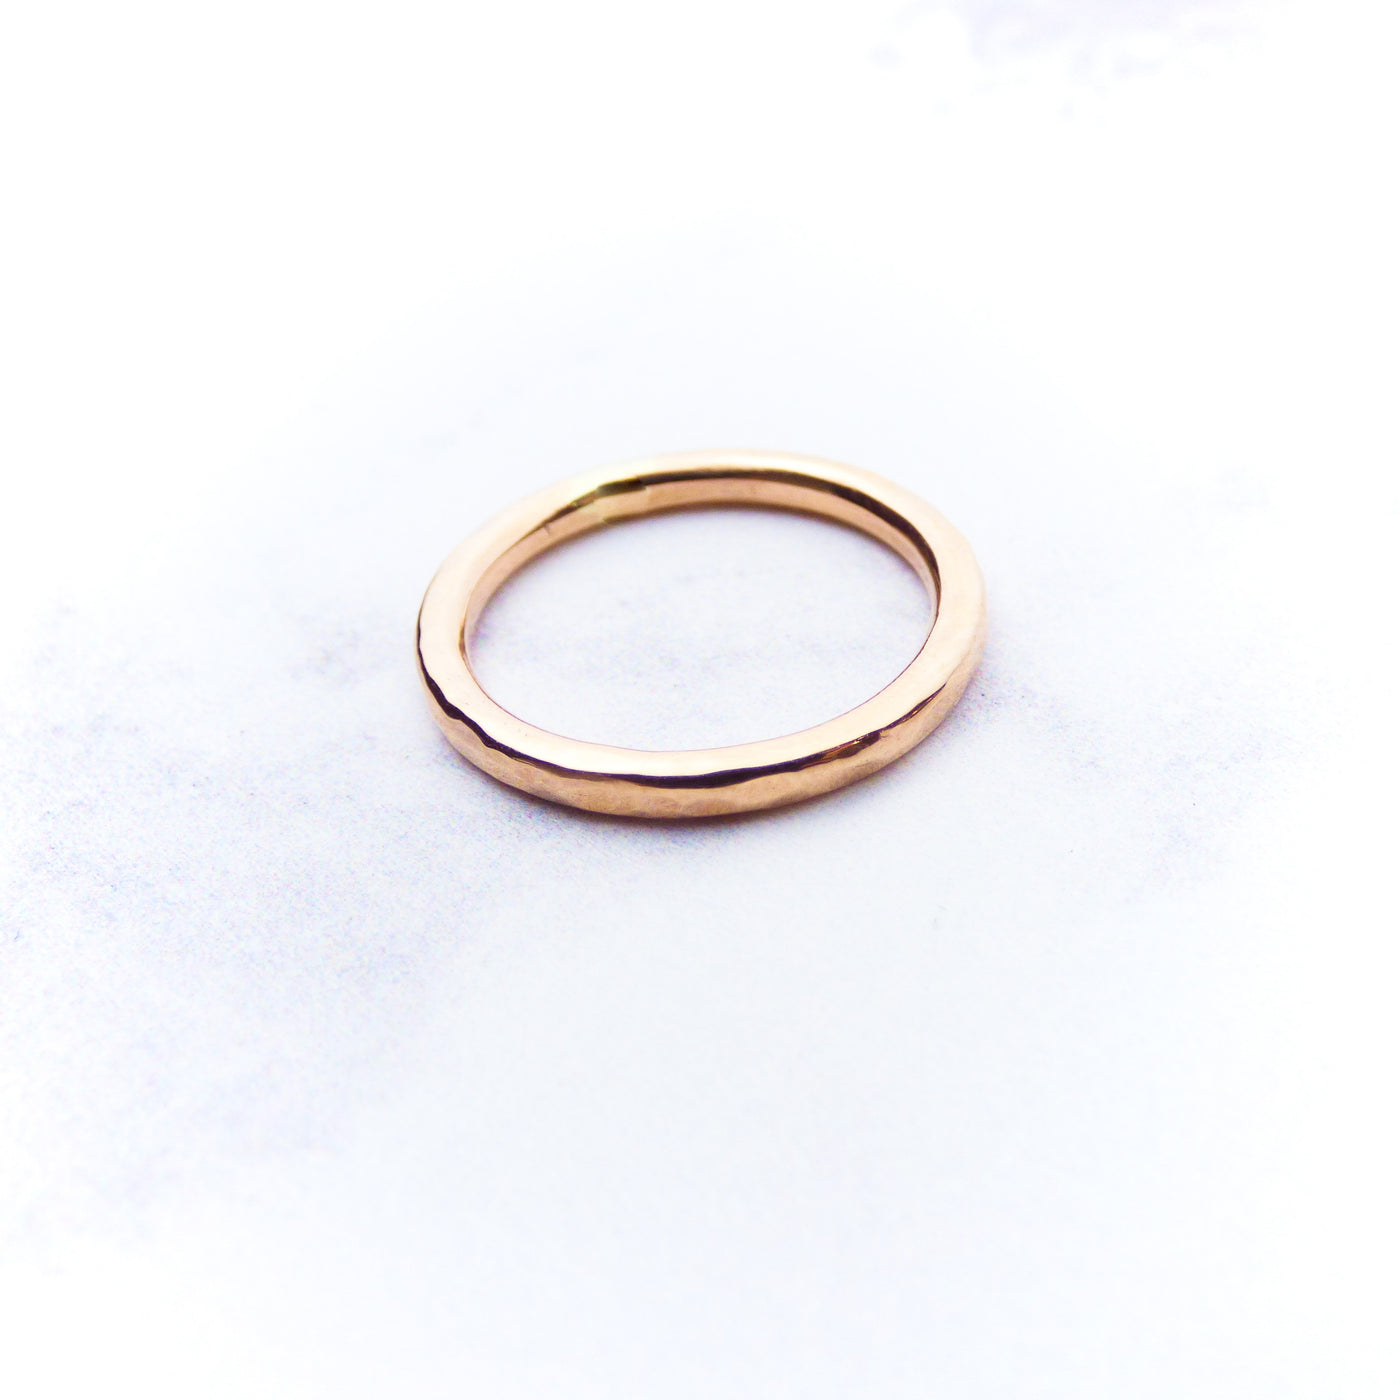 Rose Gold Hammered Ring